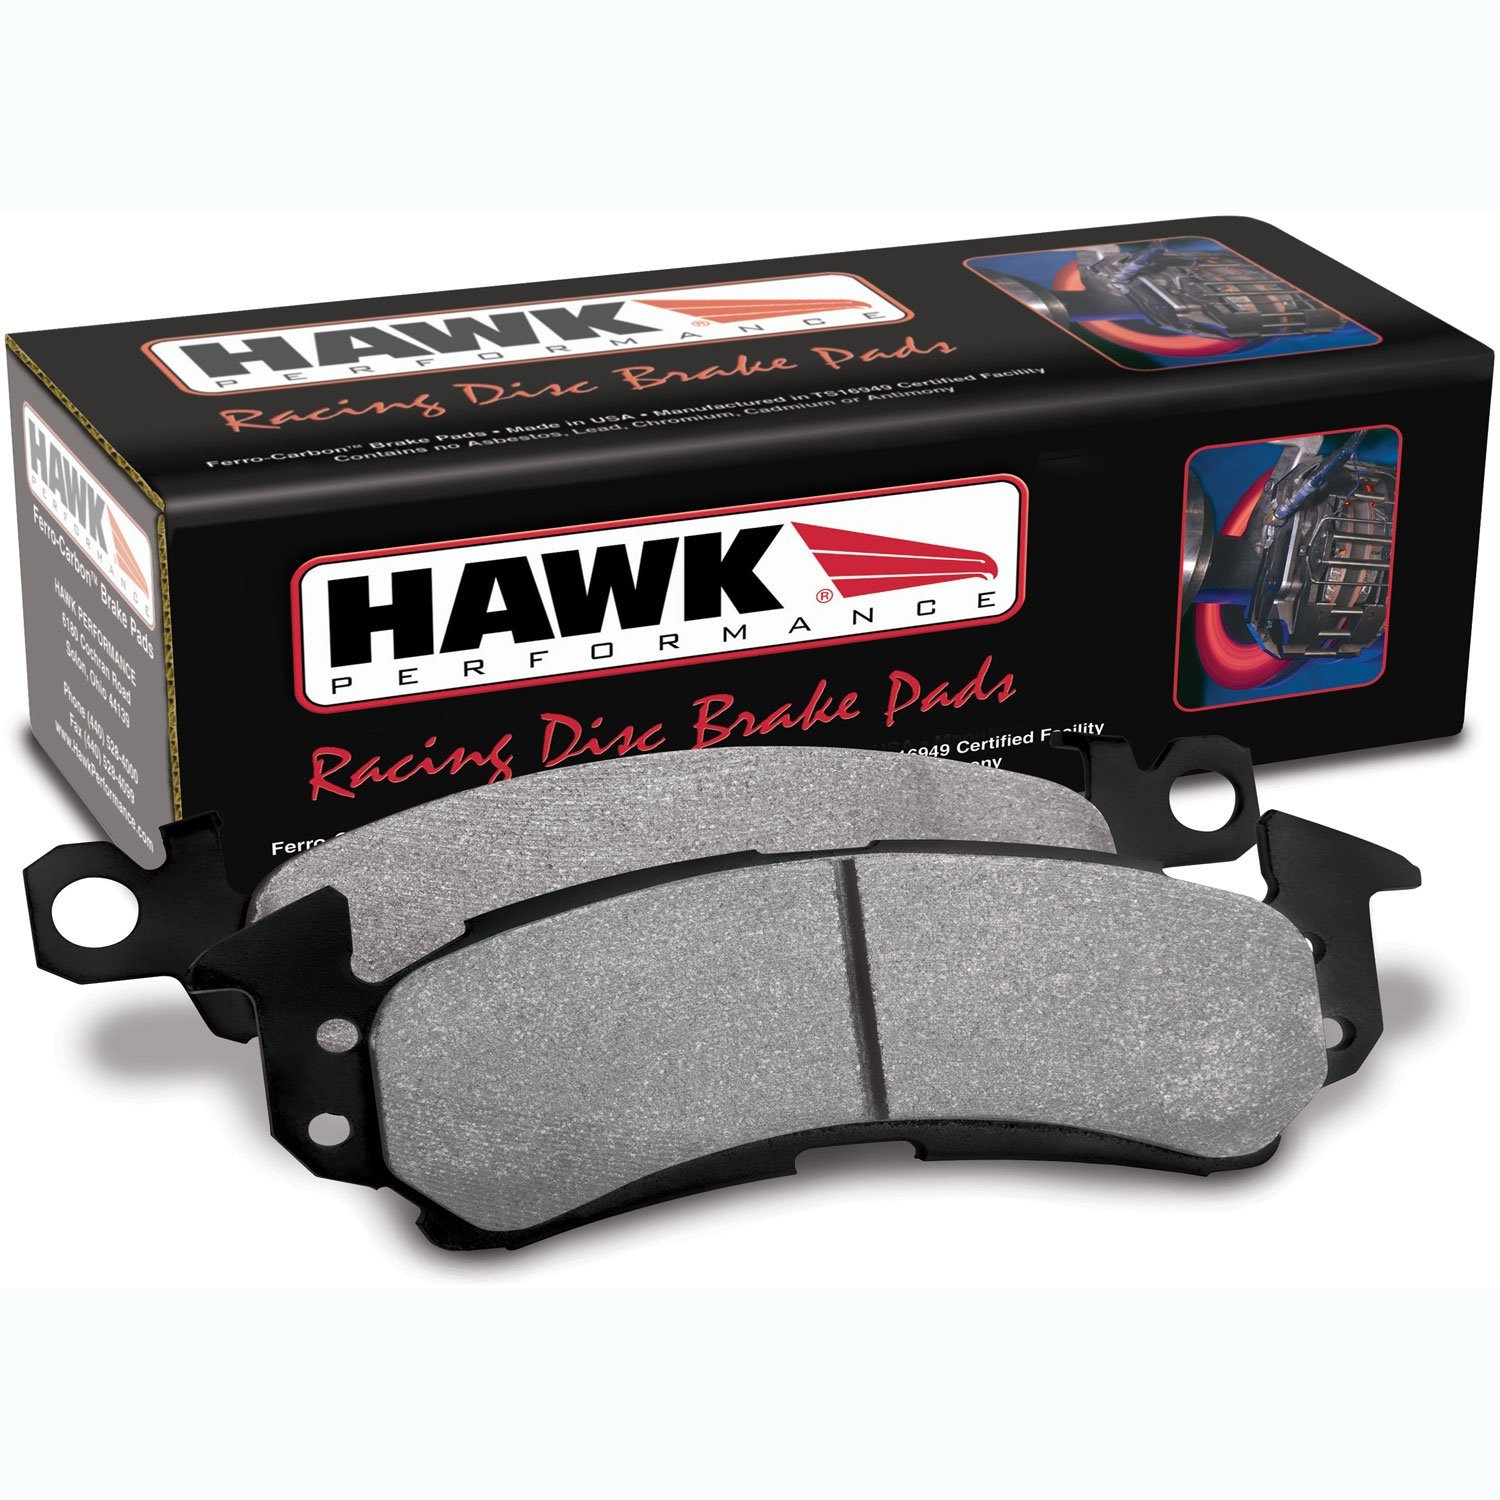 Disc Brake Pad HP Plus w/0.643 Thickness